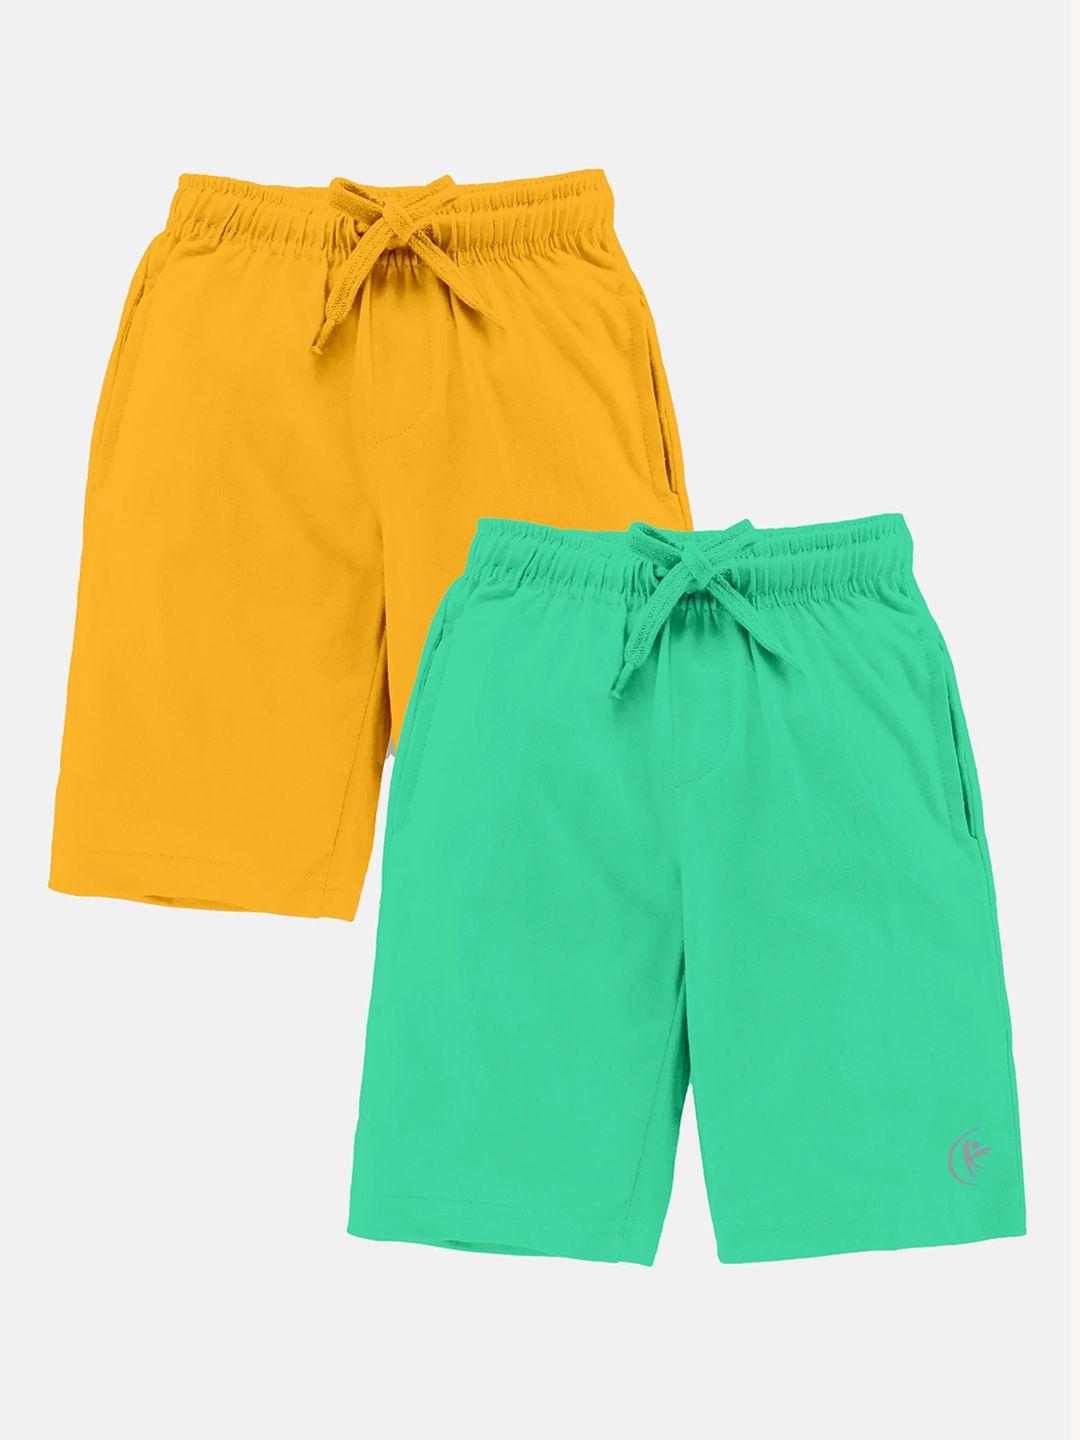 kiddopanti boys shorts